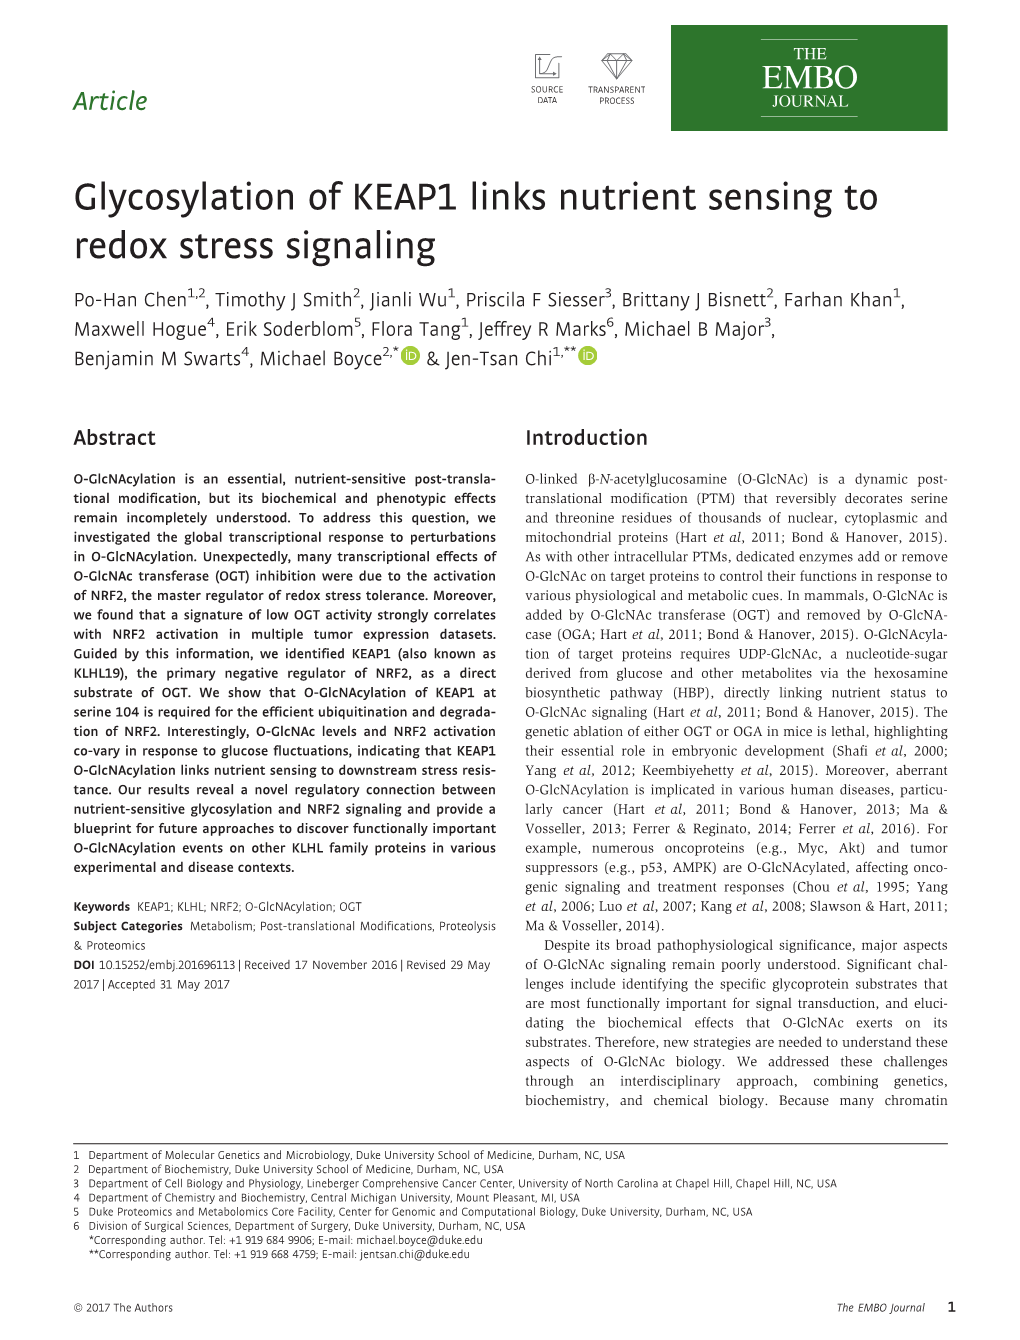 Glycosylation of KEAP1 Links Nutrient Sensing to Redox Stress Signaling